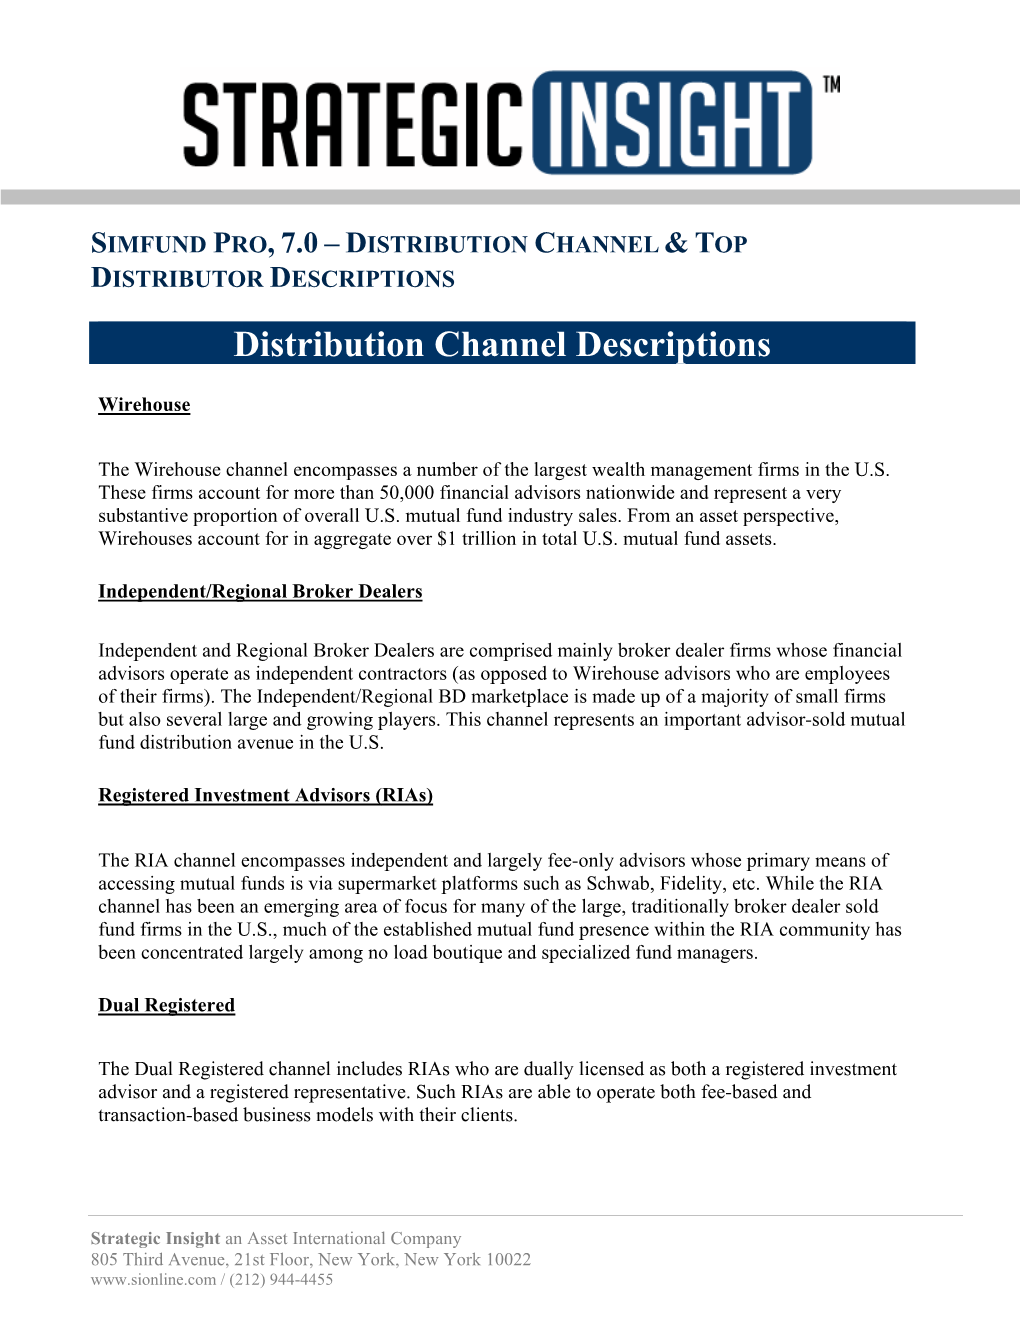 Simfund Pro, 7.0 – Distribution Channel & Top Distributor Descriptions